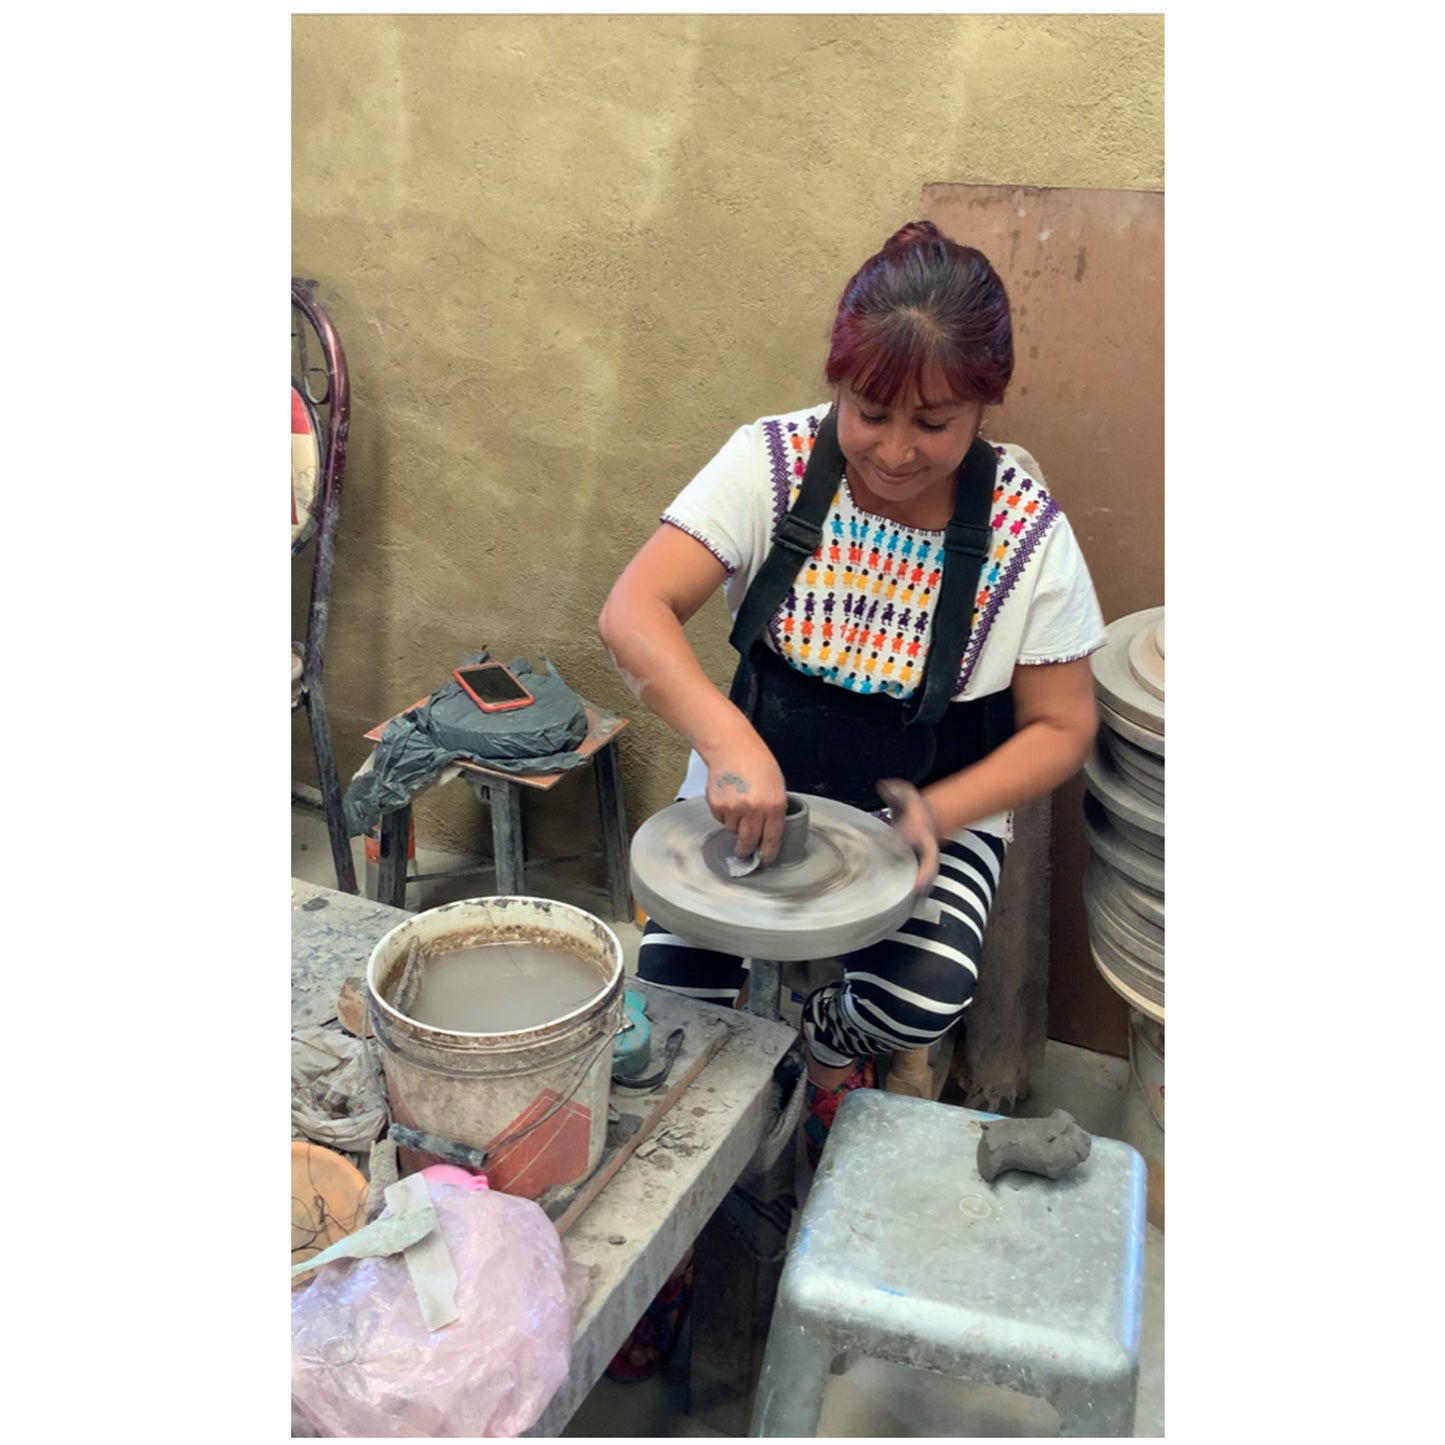 Tazas de Mezcal de Barro Negro | Vasos de Mezcal | Vasos de chupito de arcilla | Hecho a mano en Oaxaca, México.